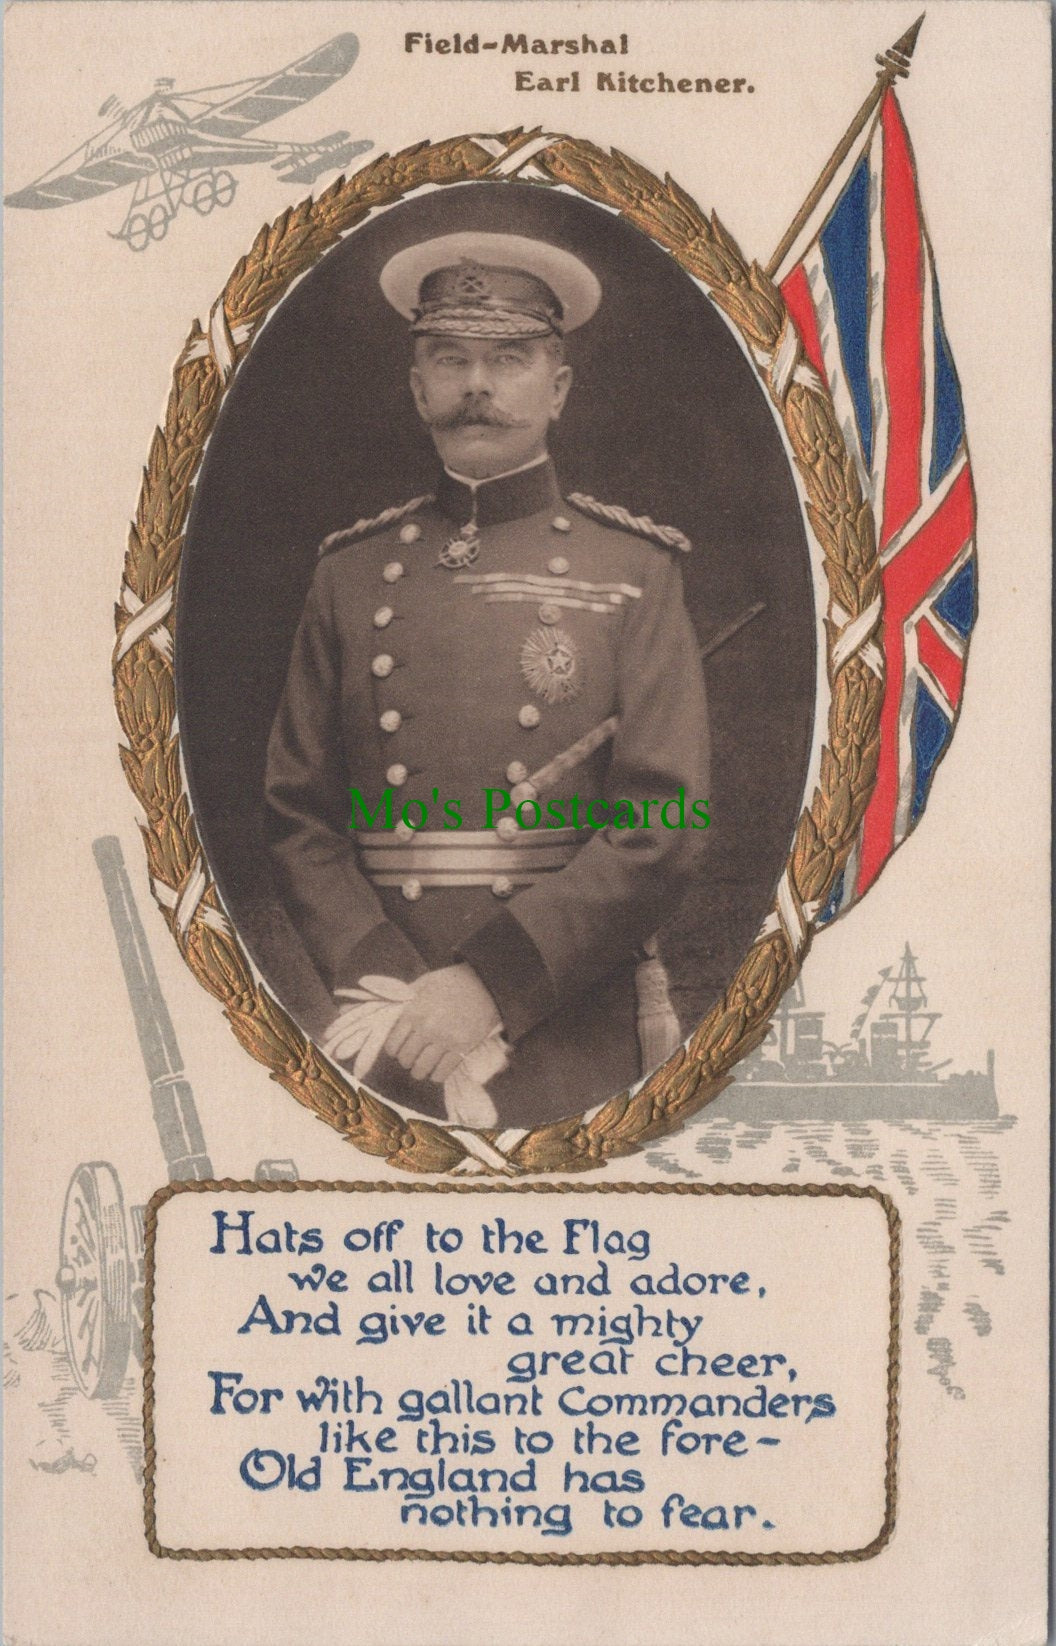 Field-Marshal Earl Kitchener